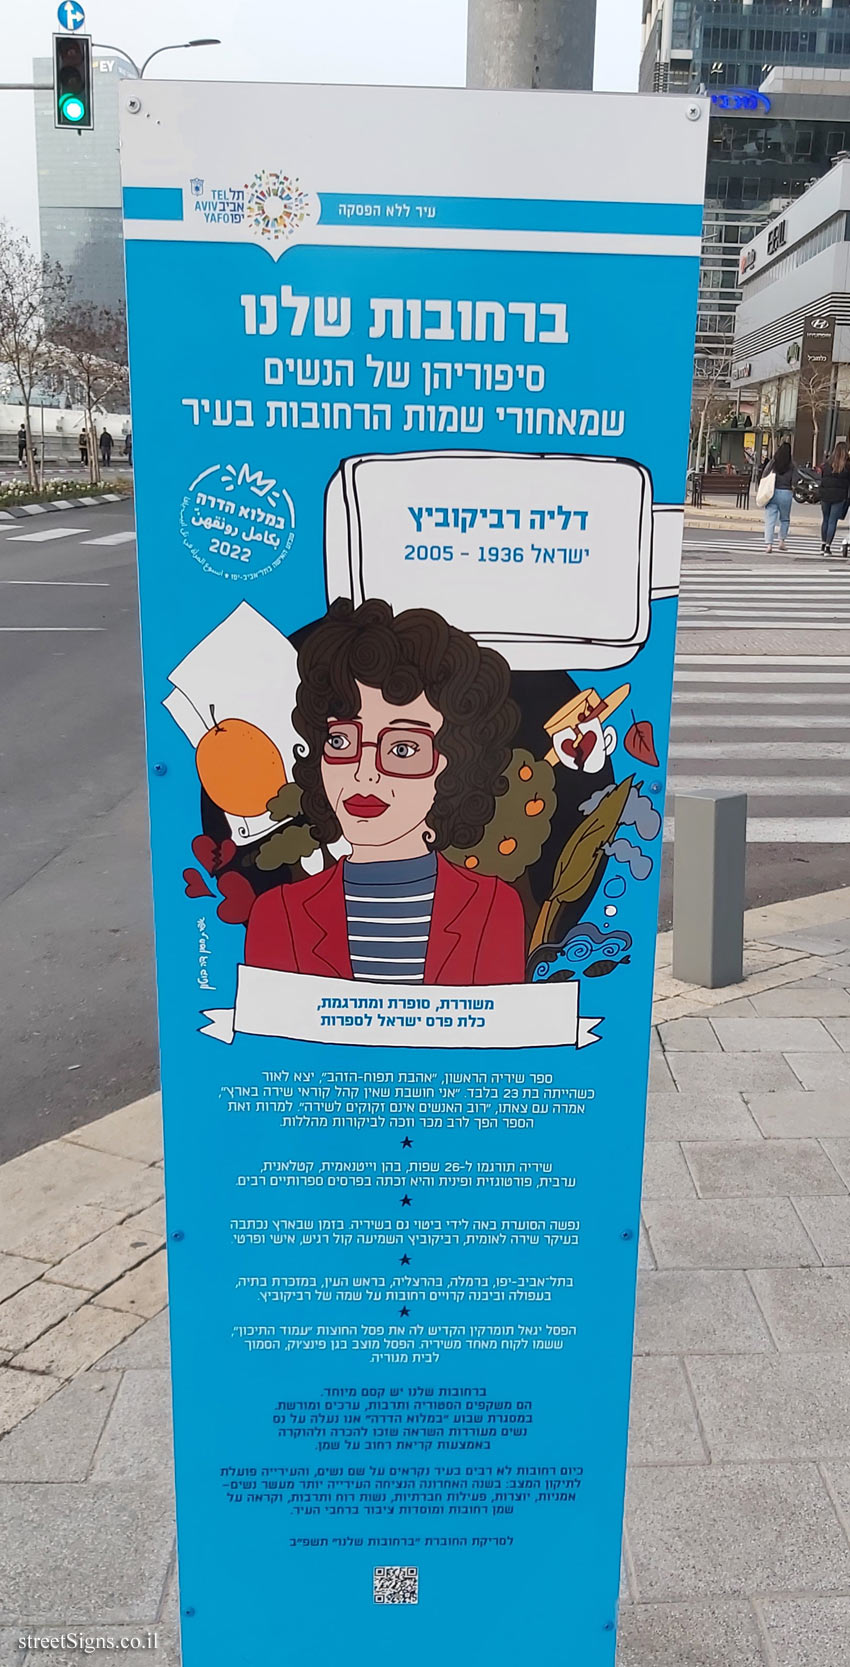 Tel Aviv - in our streets - Dahlia Ravikovitch